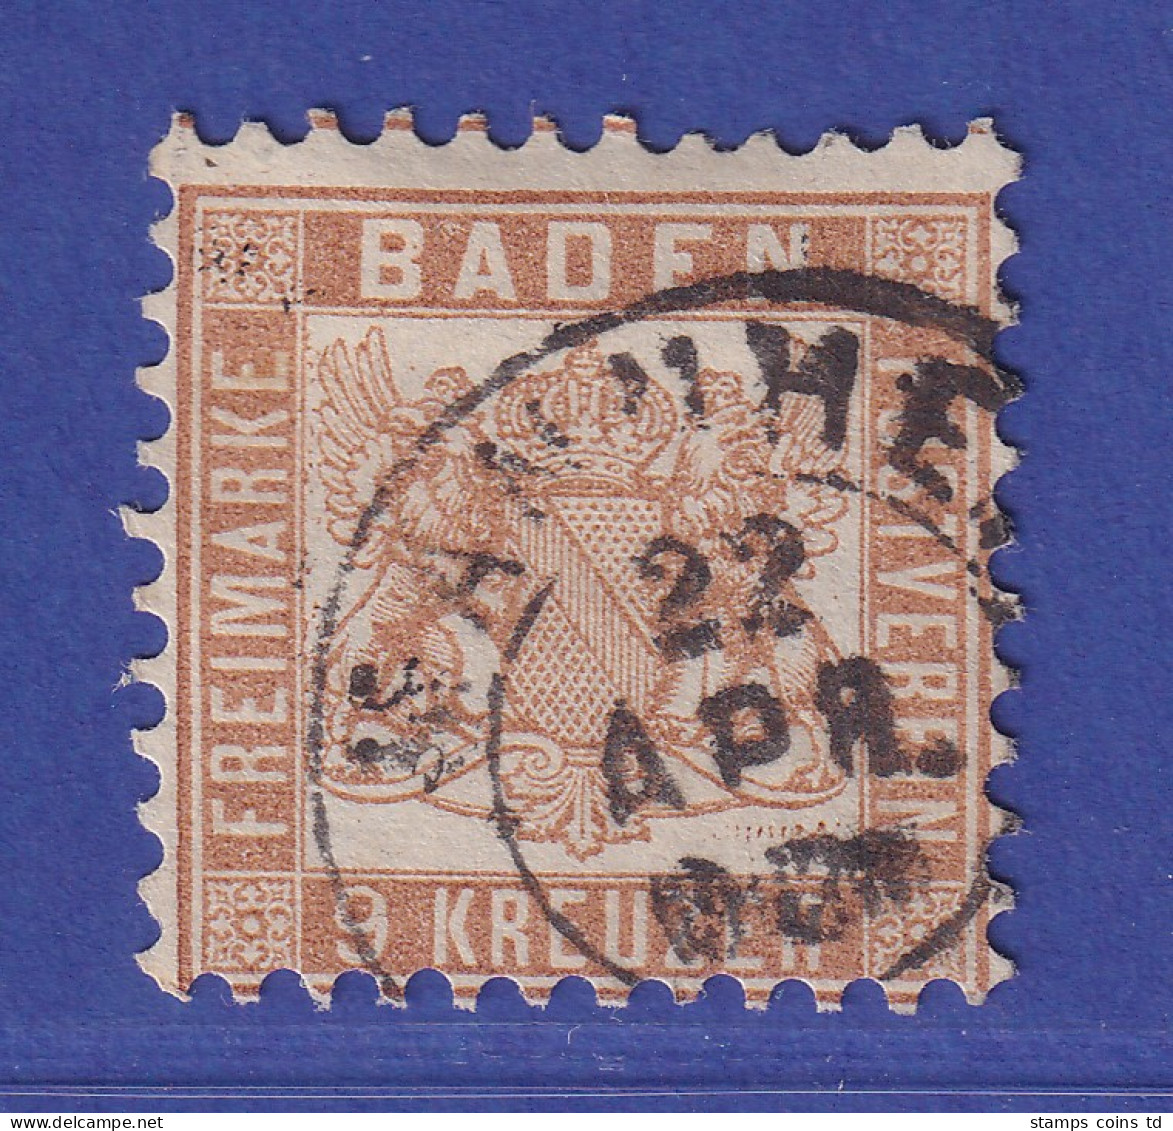 Baden 9 Kreuzer Mi.-Nr. 20b  O MANNHEIM - Used